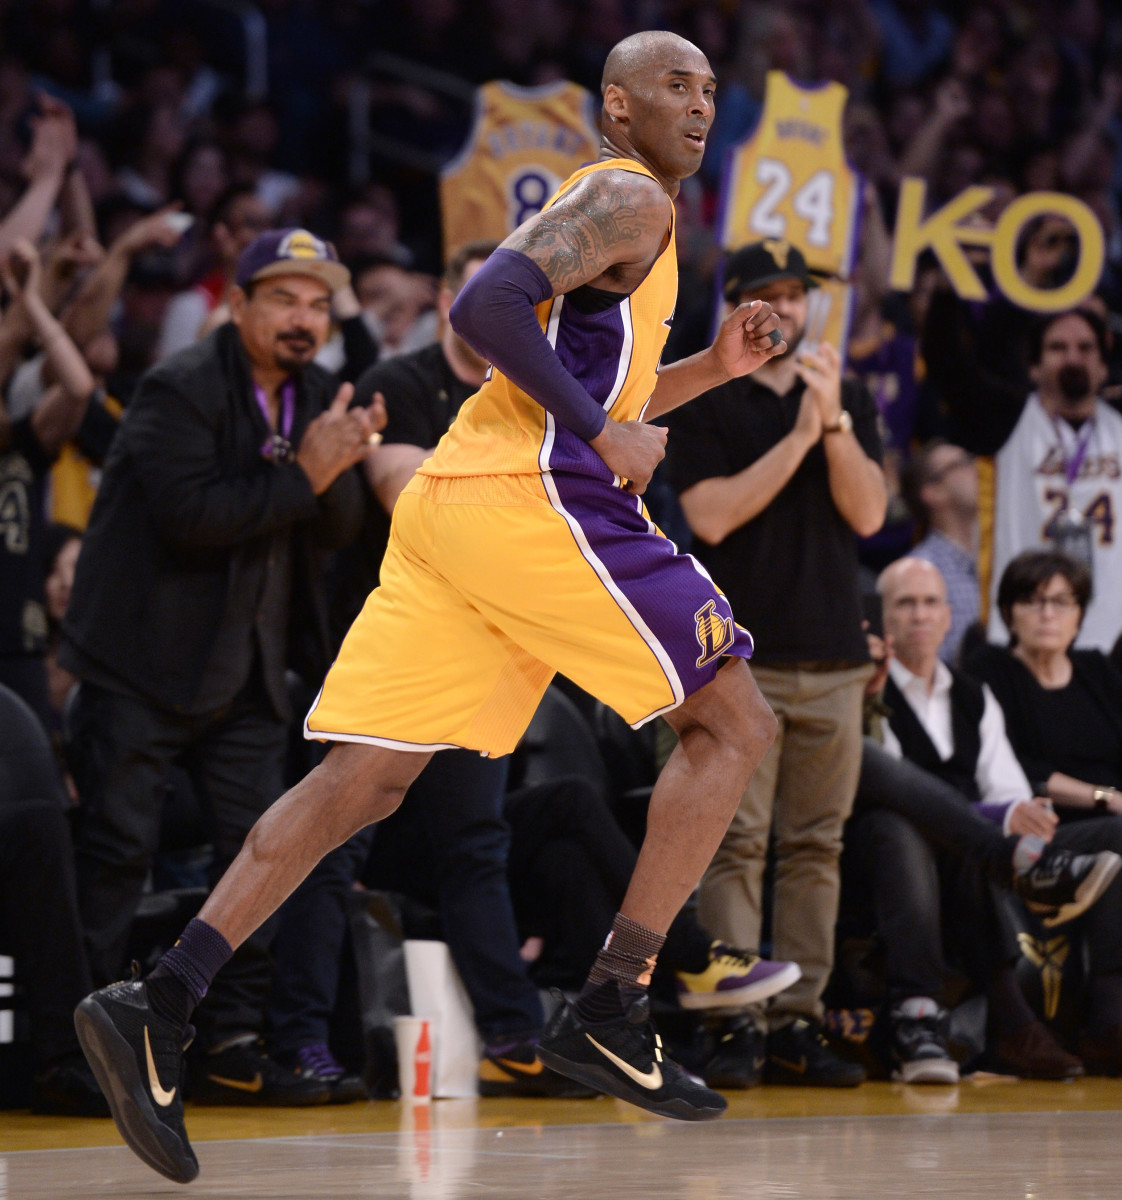 Cooper Kupp Honors Kobe Bryant  Cooper Kupp saluting Kobe Bryant